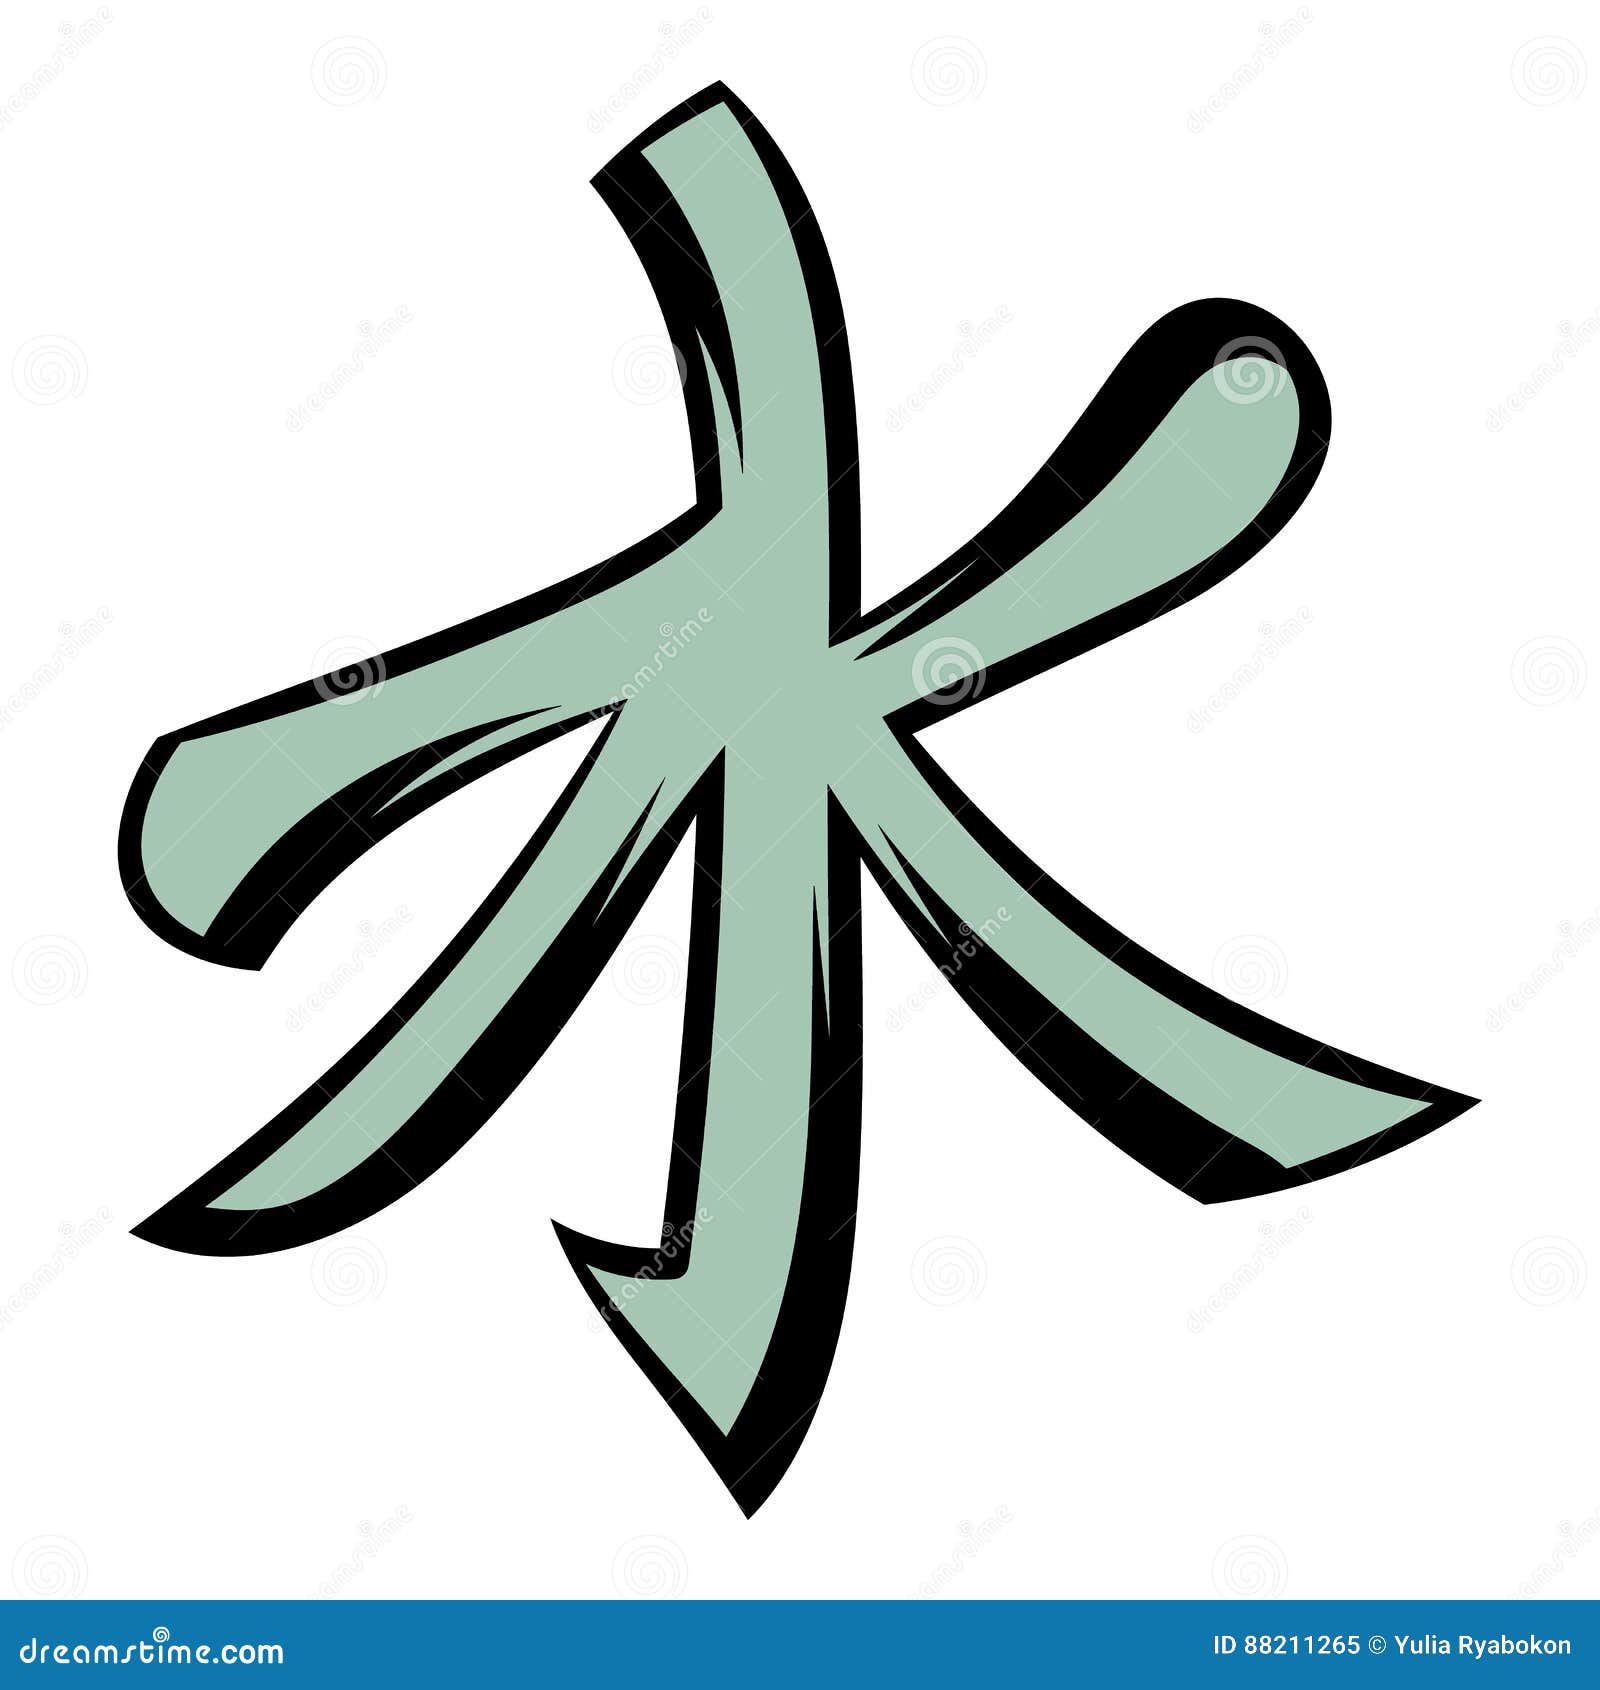 confucianism icon cartoon